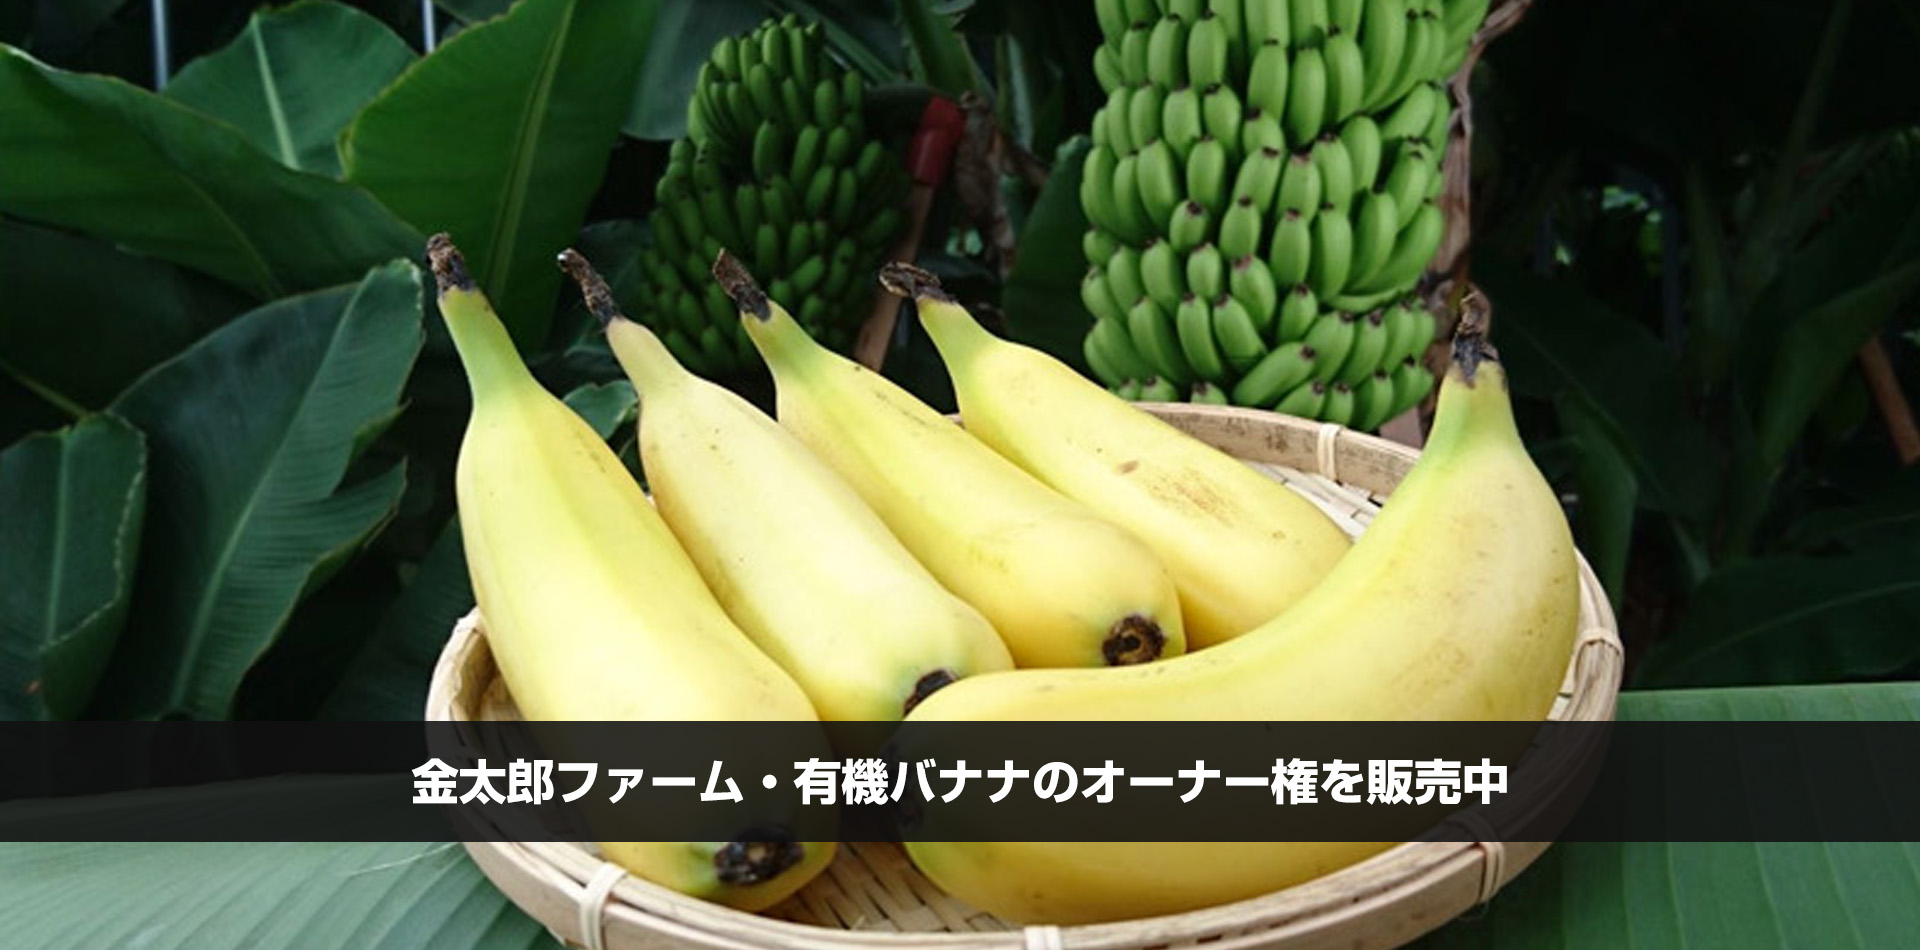 banana_top_org